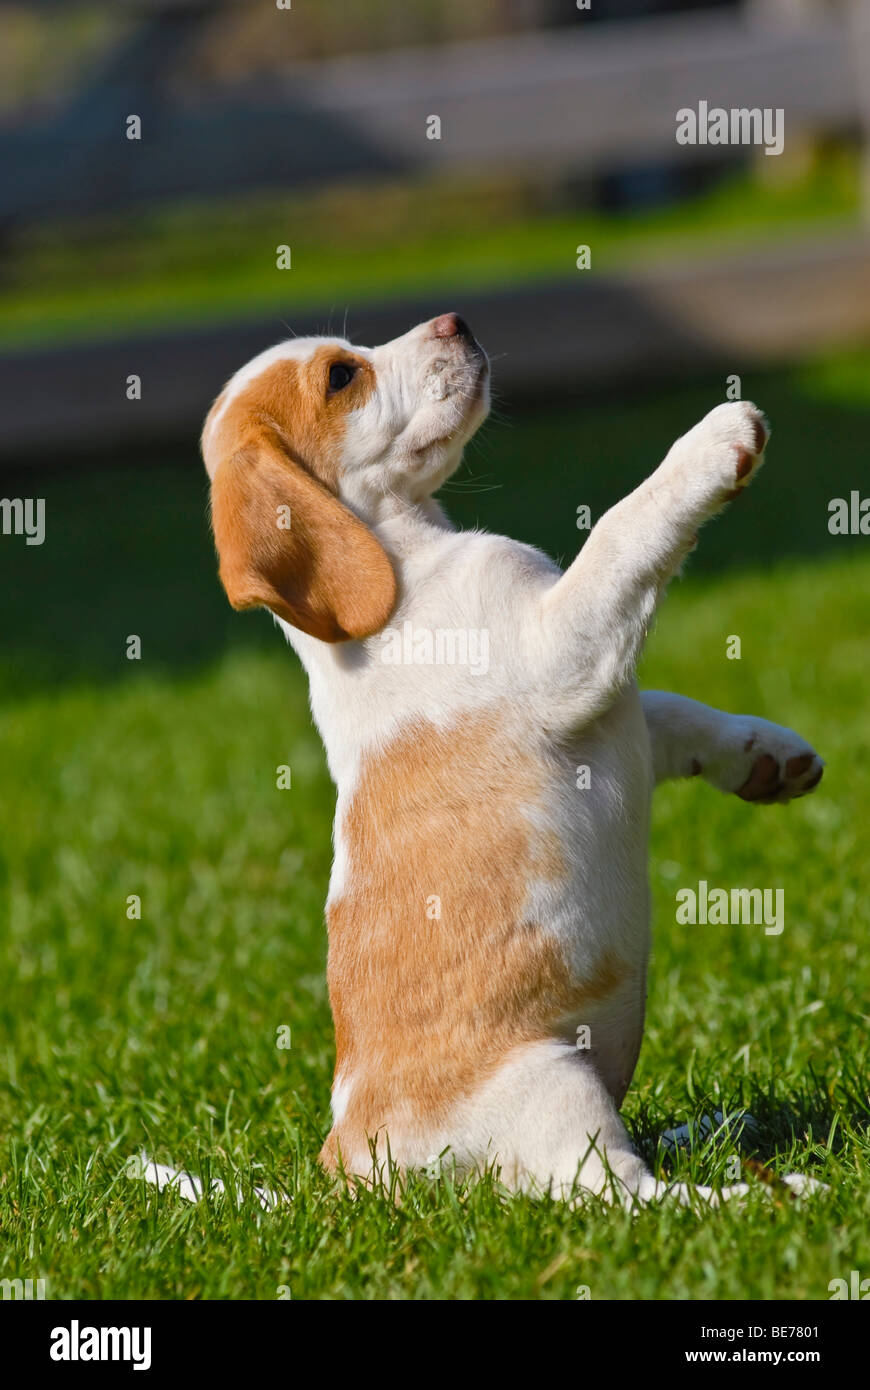 Beagle puppy standing upright Stock Photo